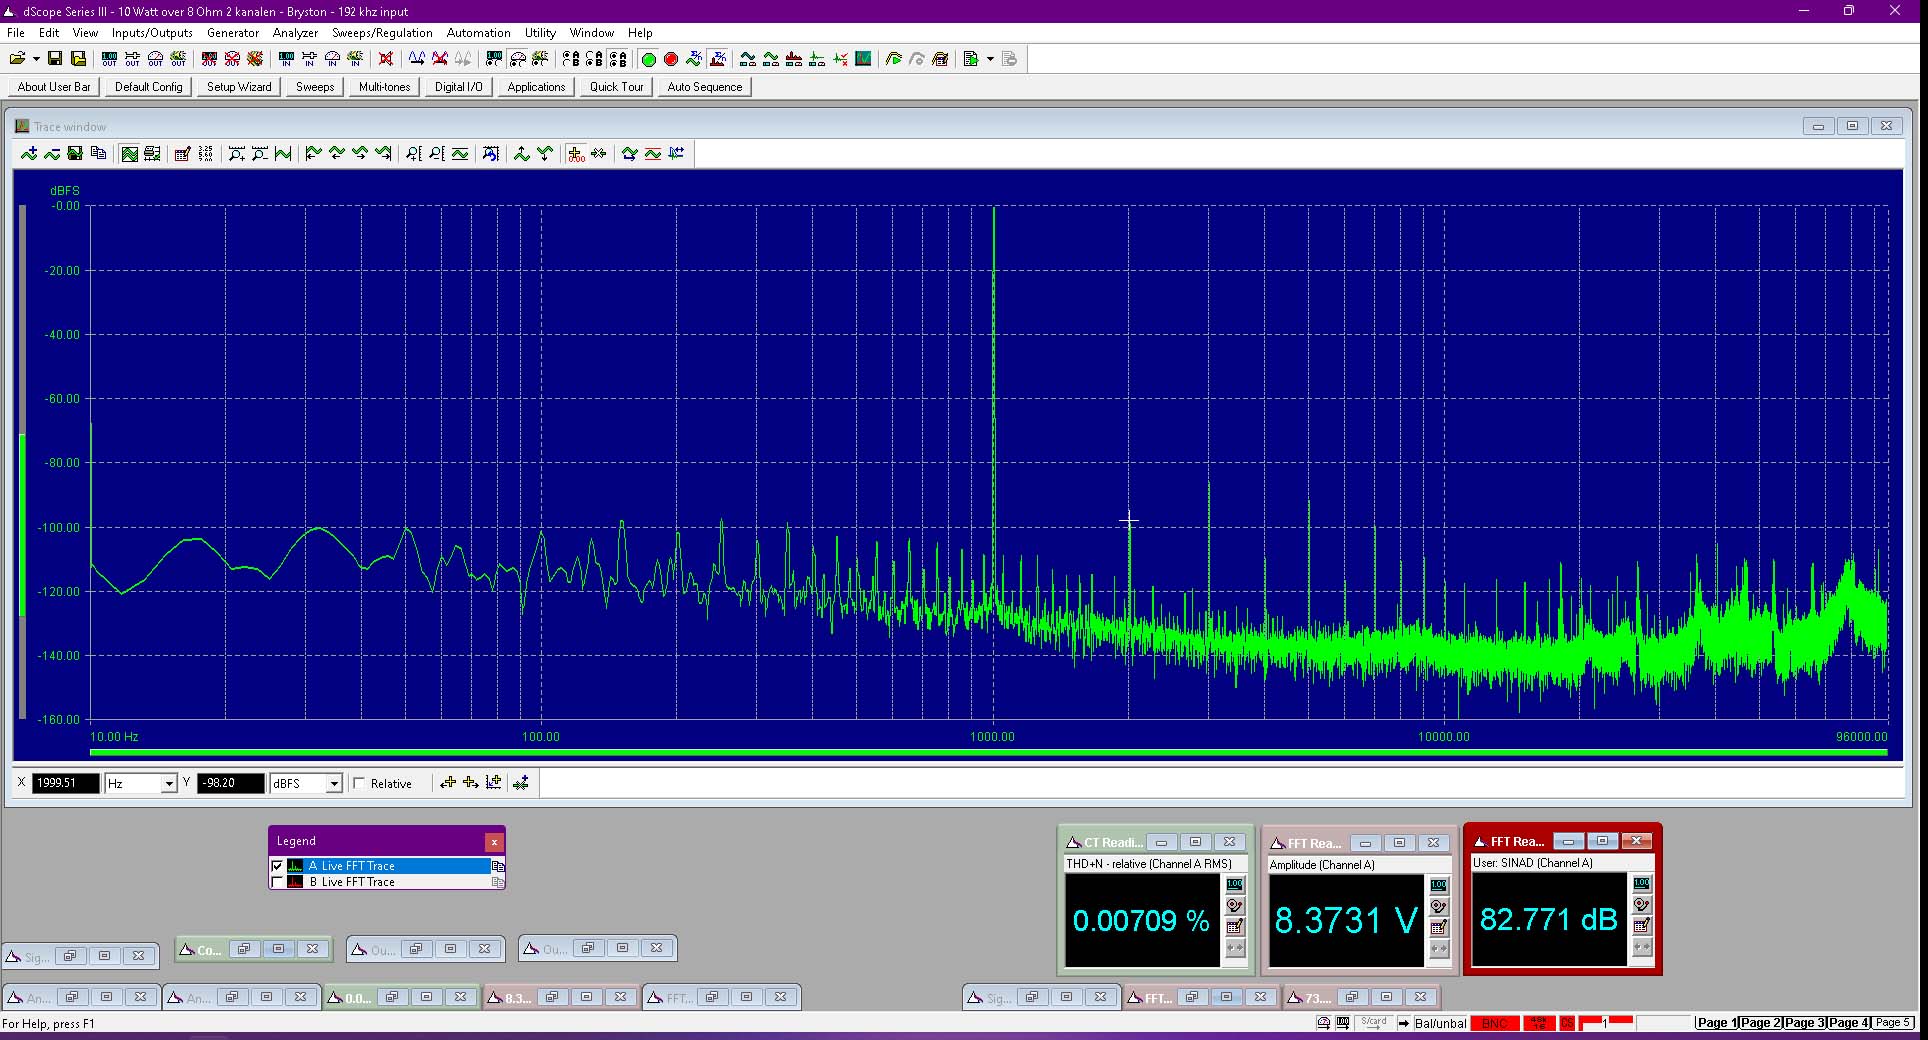 ASR Emitter 1 - 10 watt - 8 Ohm